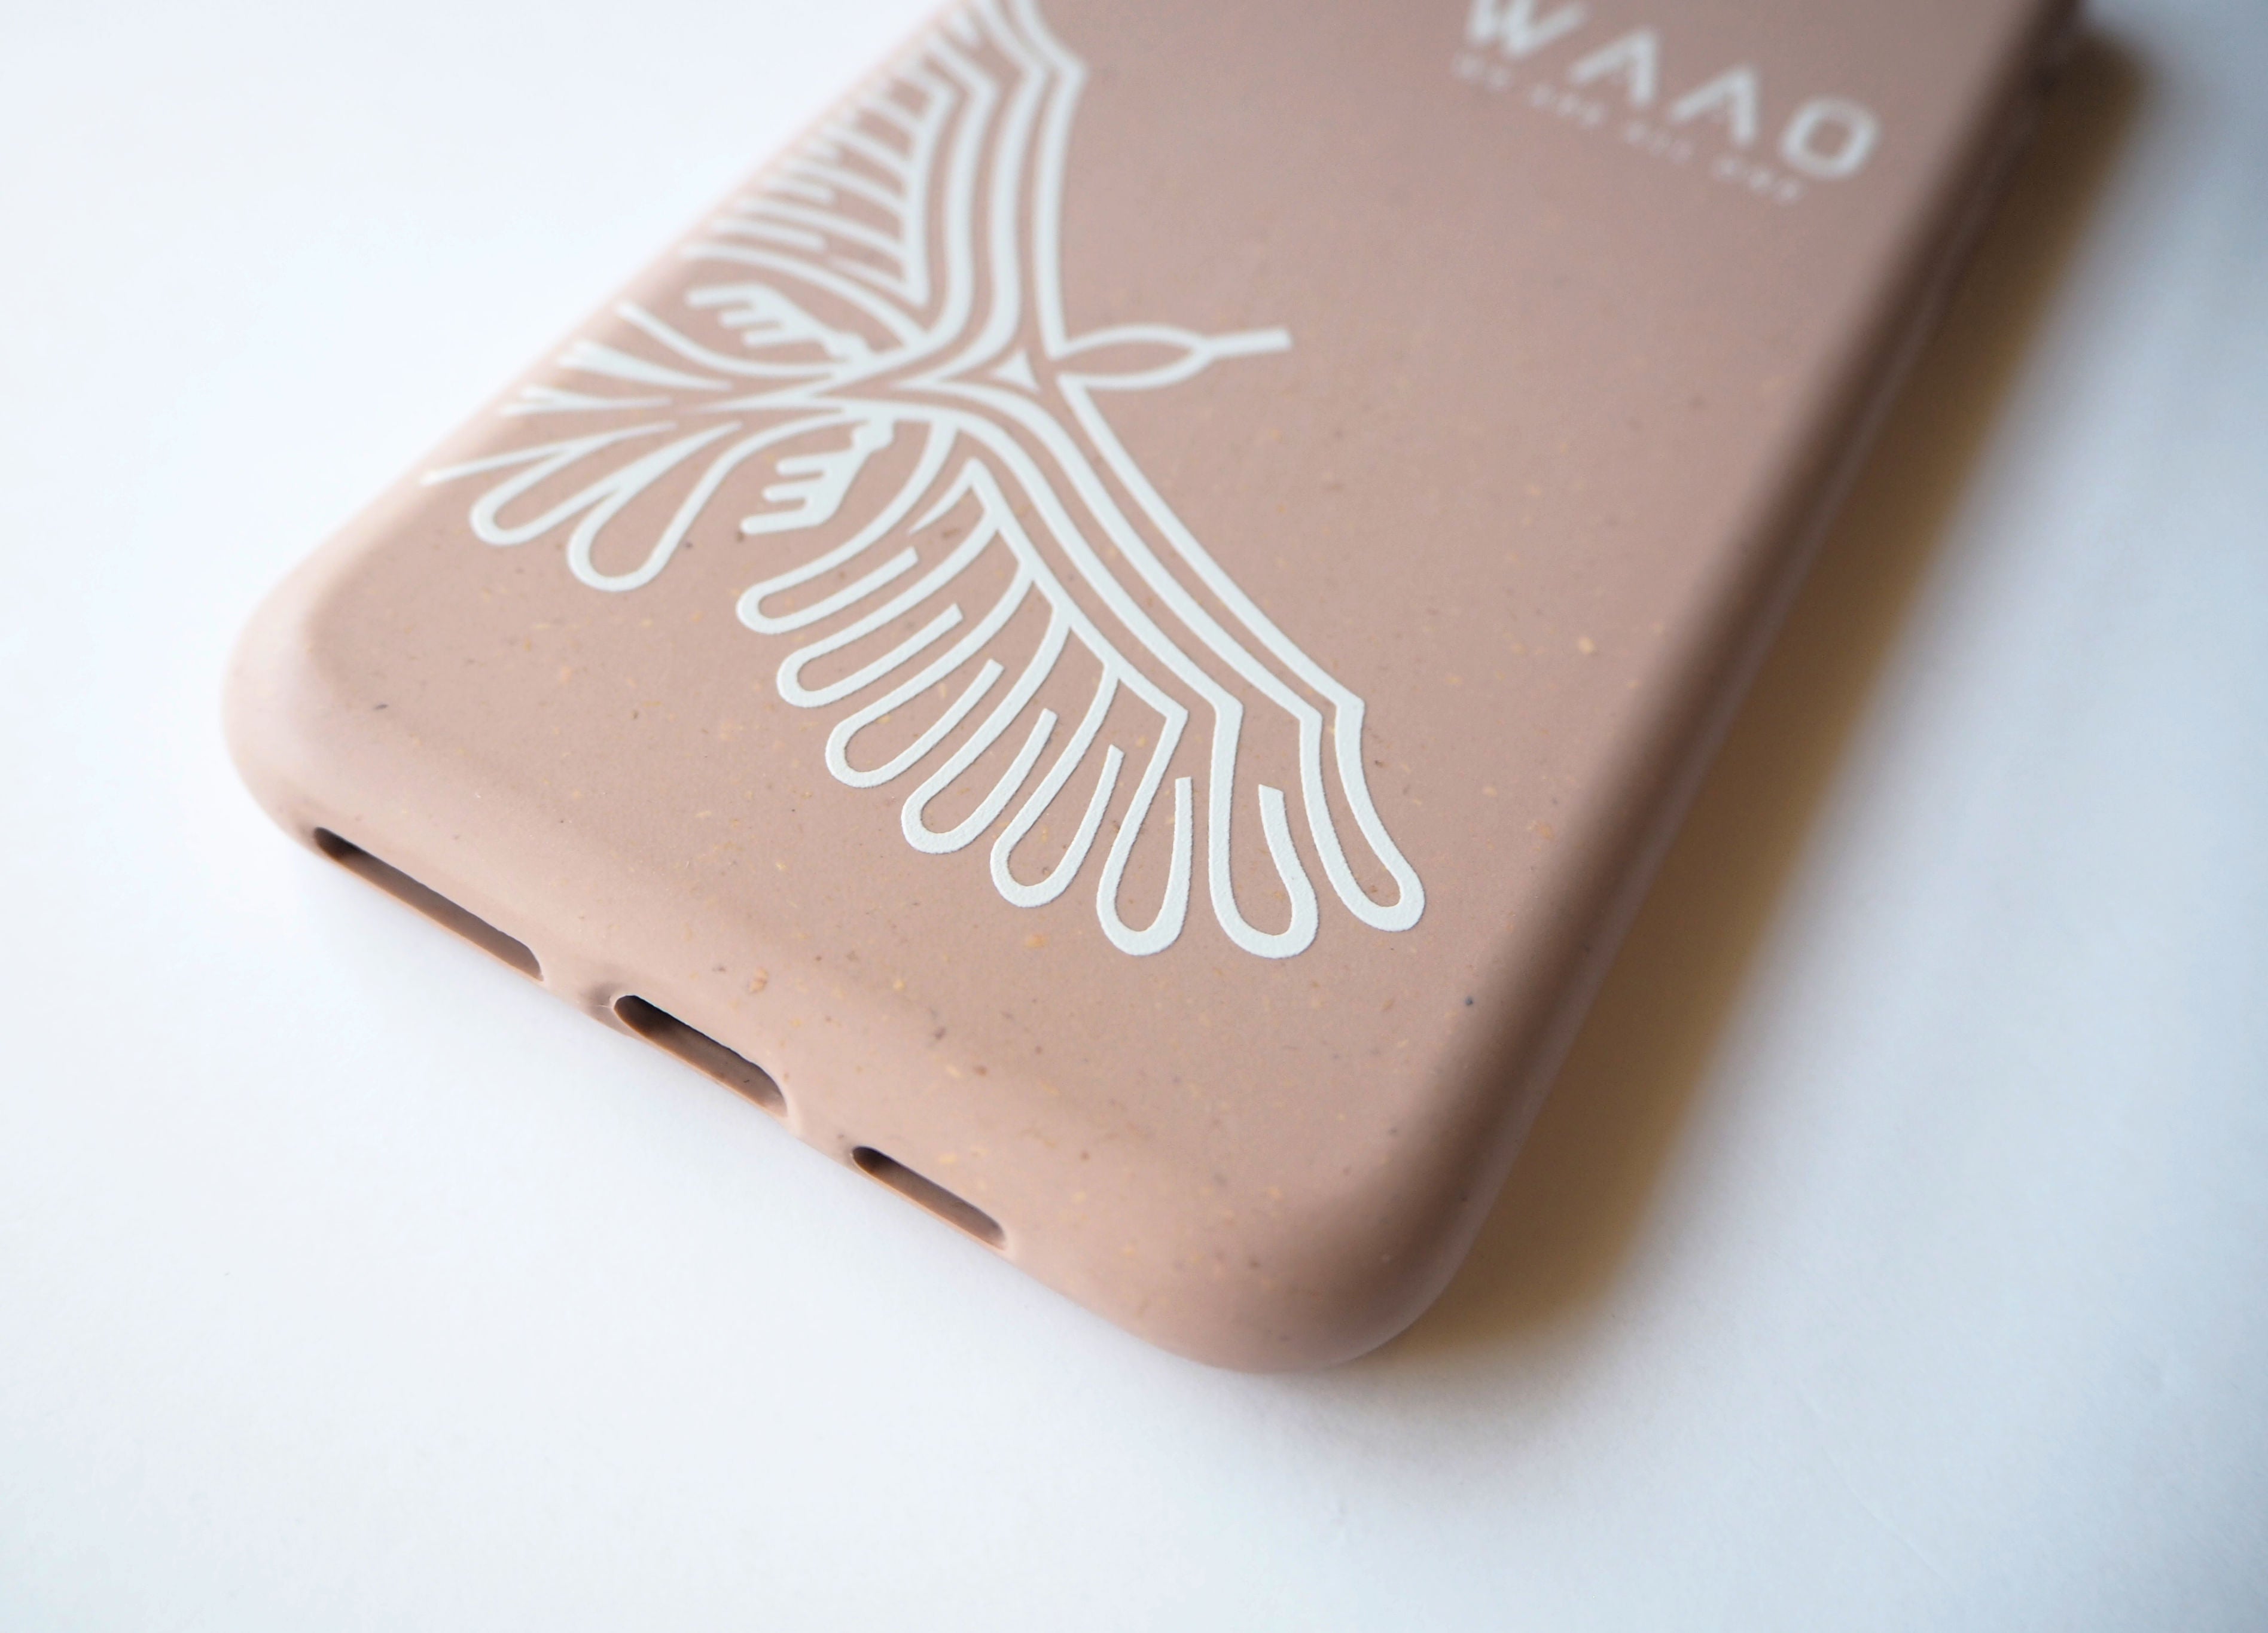 WAAO Eco-friendly Sand Pink Phone Case